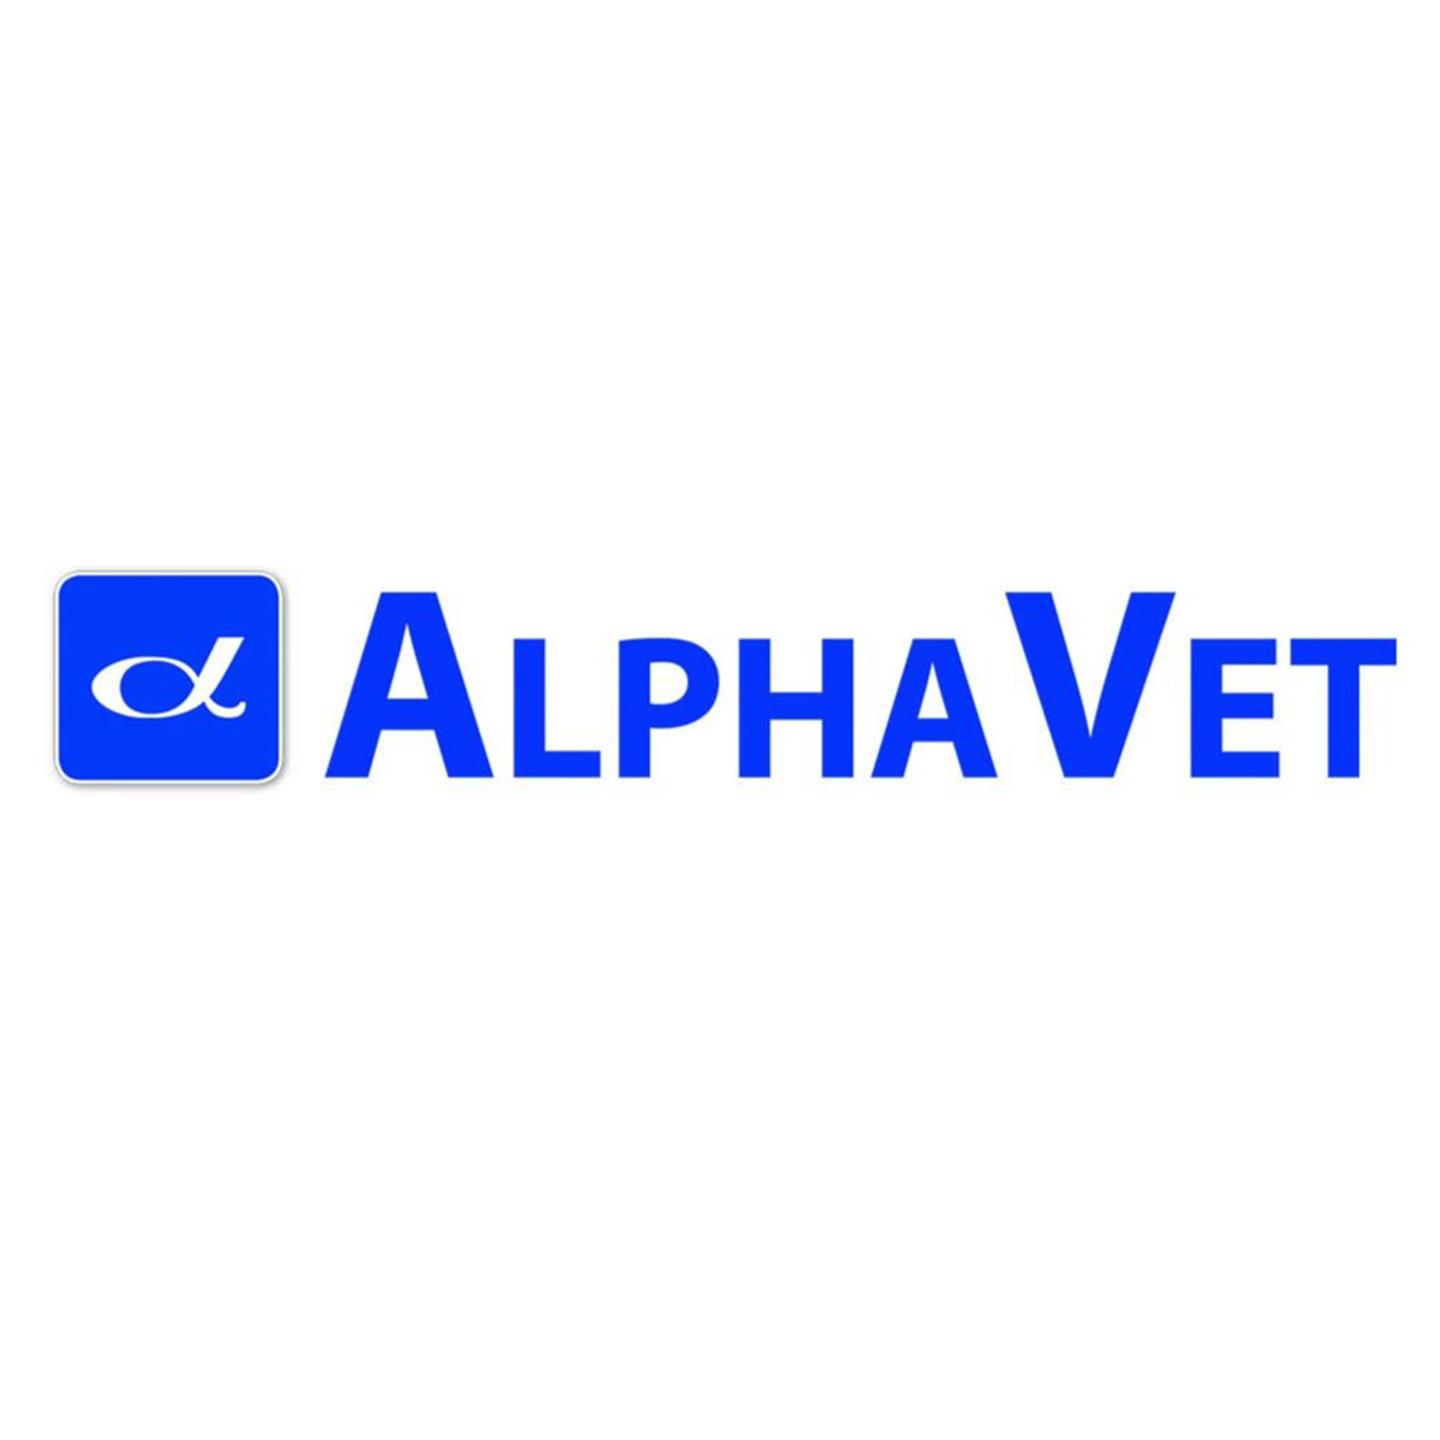 roxell-distributor-hungary-alpha-vet-logo